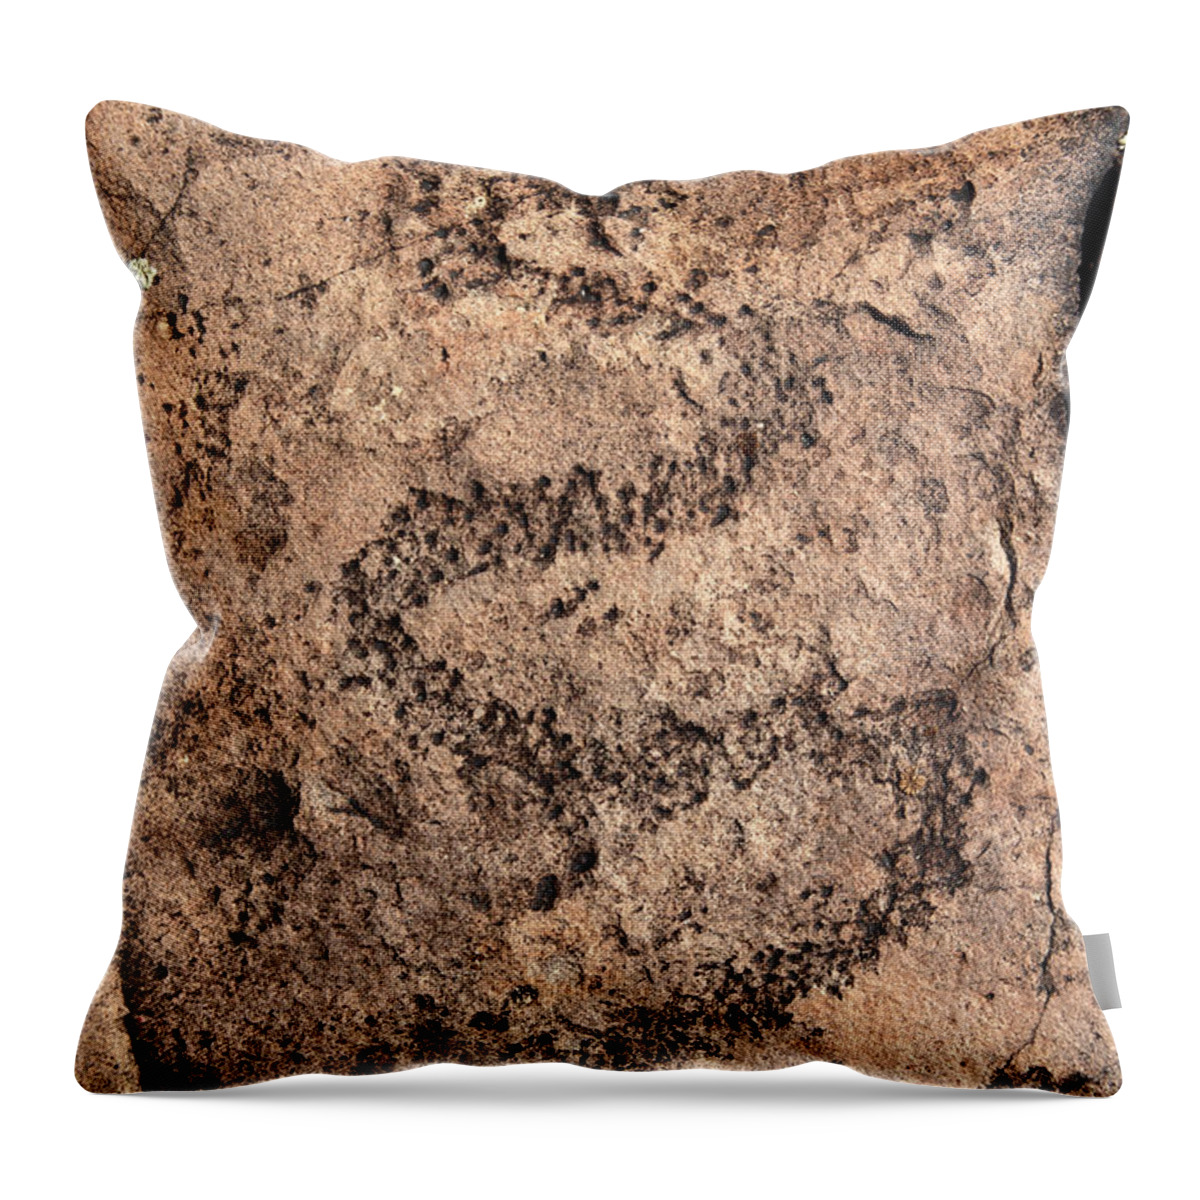 Utah Throw Pillow featuring the photograph Provo Canyon Petroglyph BP1_0764 by Brett Pelletier